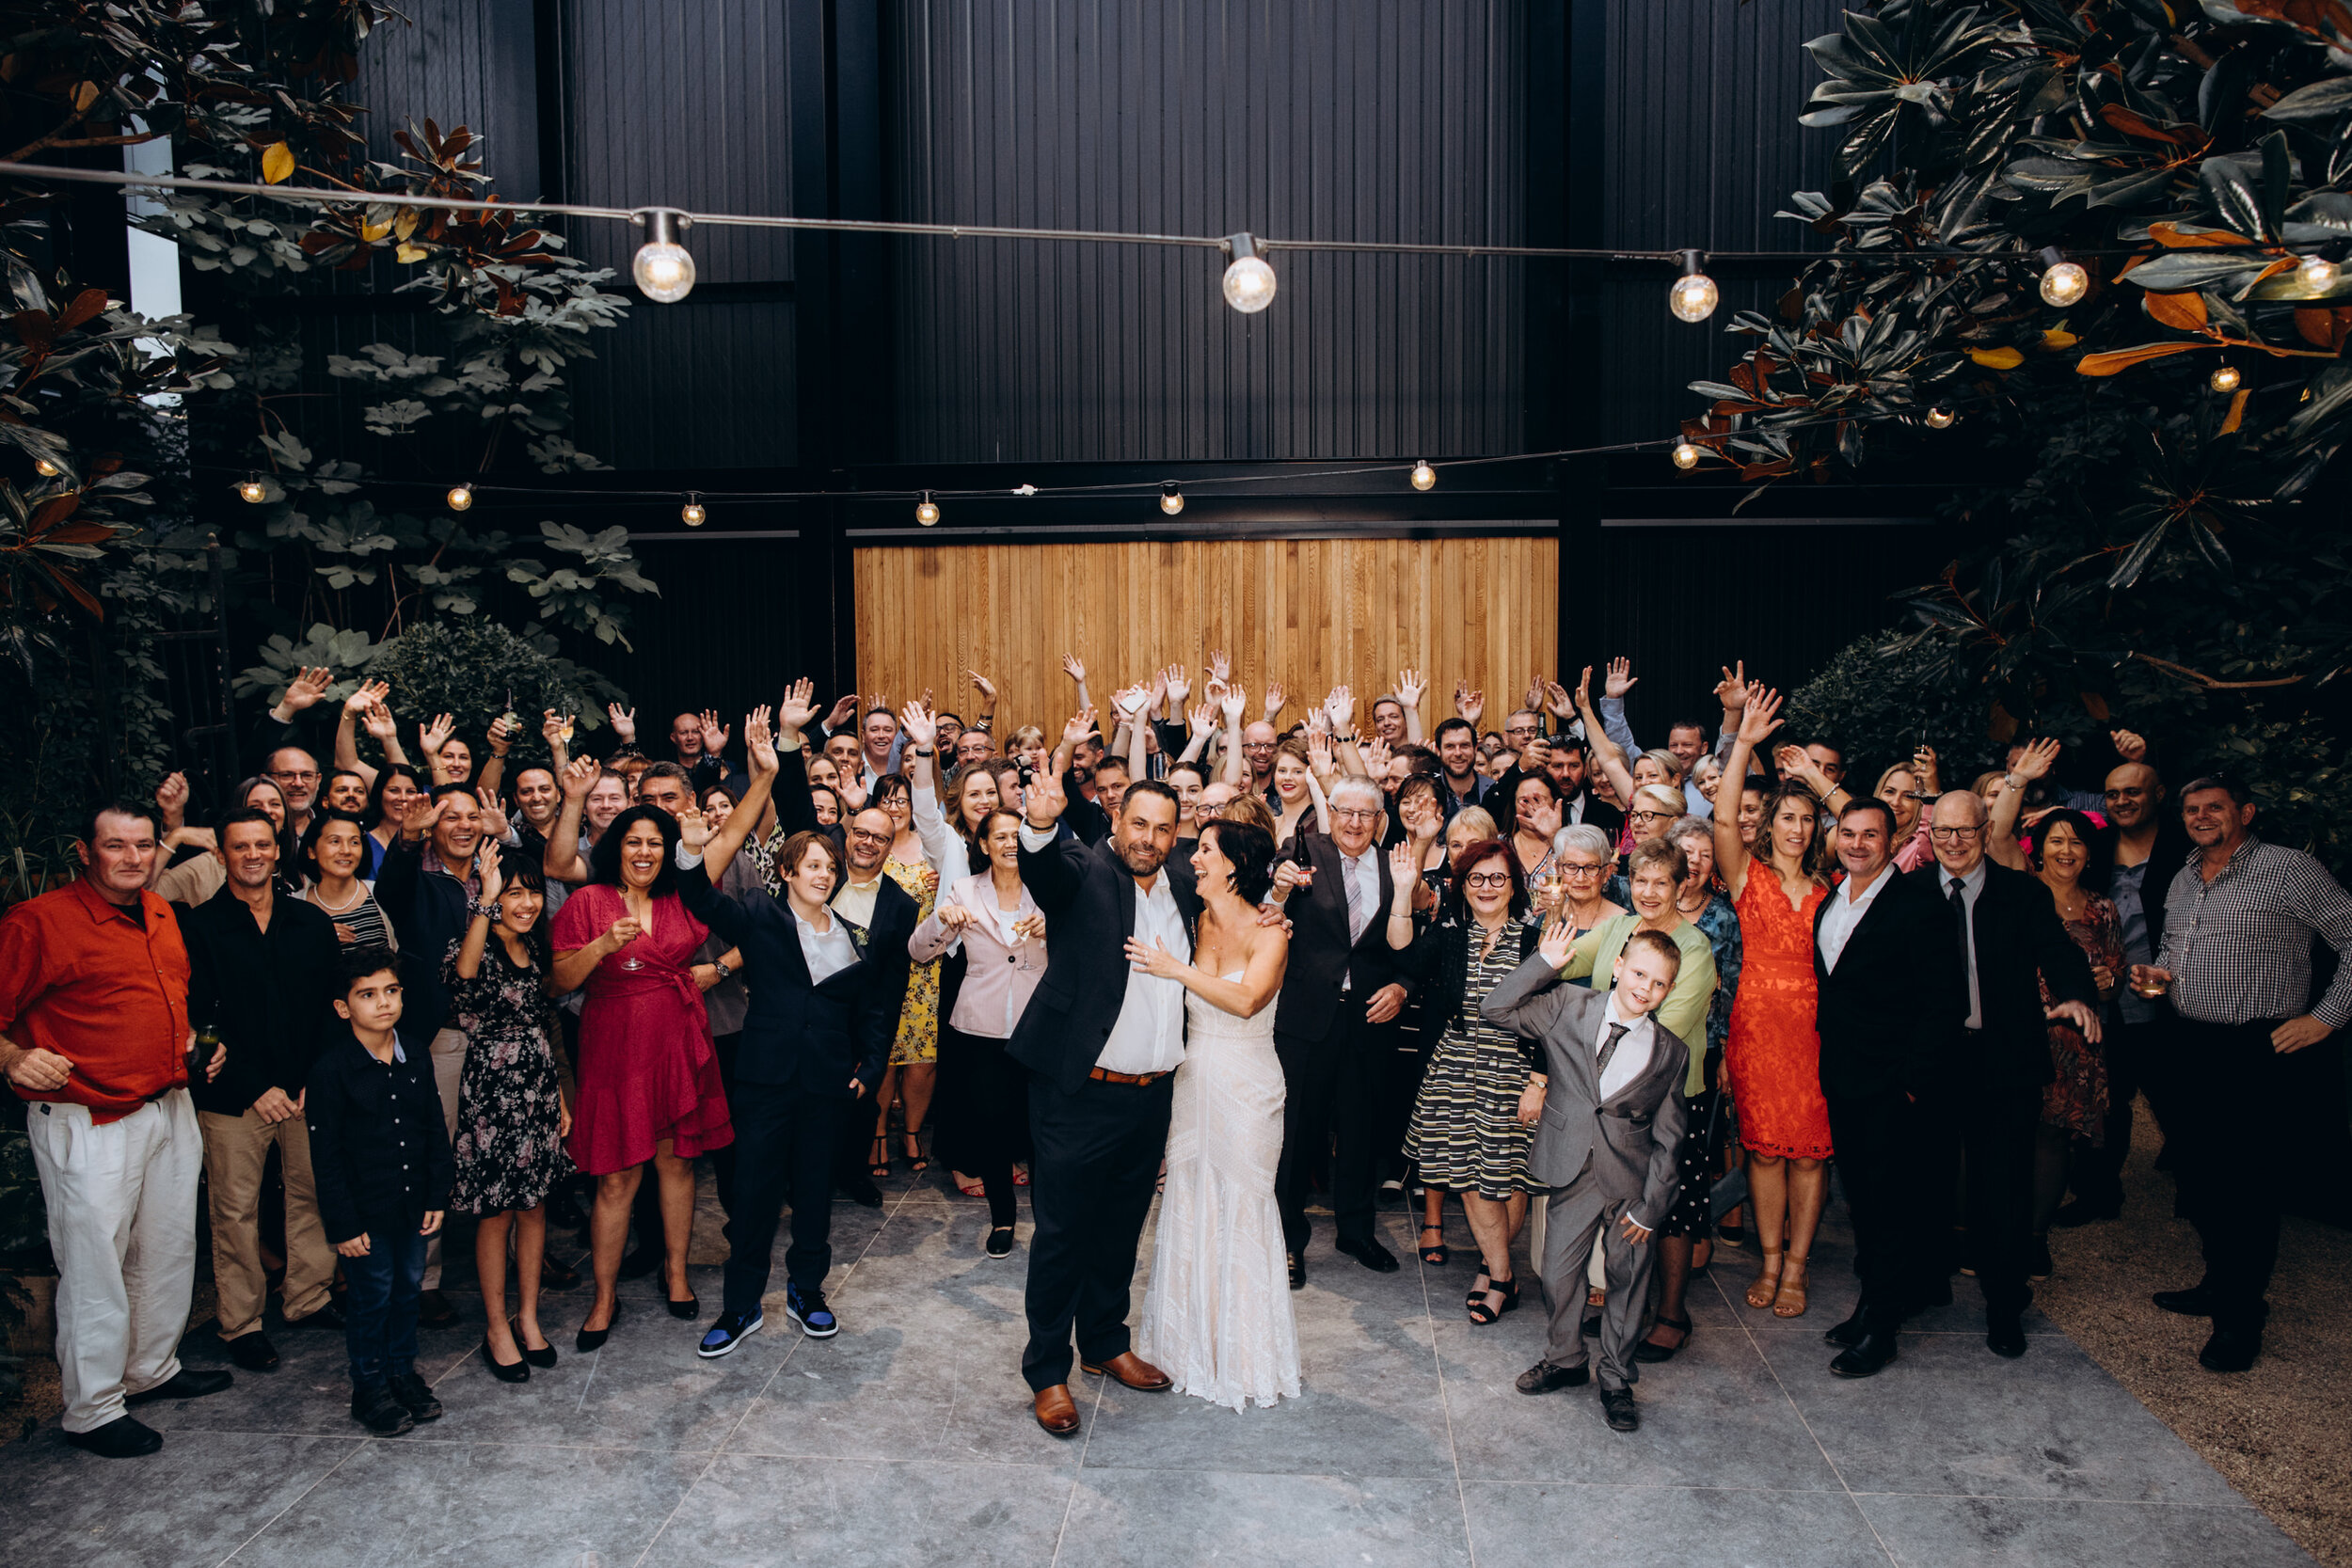 The Glasshouse Morningside | Auckland wedding photographer | New Zealand wedding packages | Auckland photography